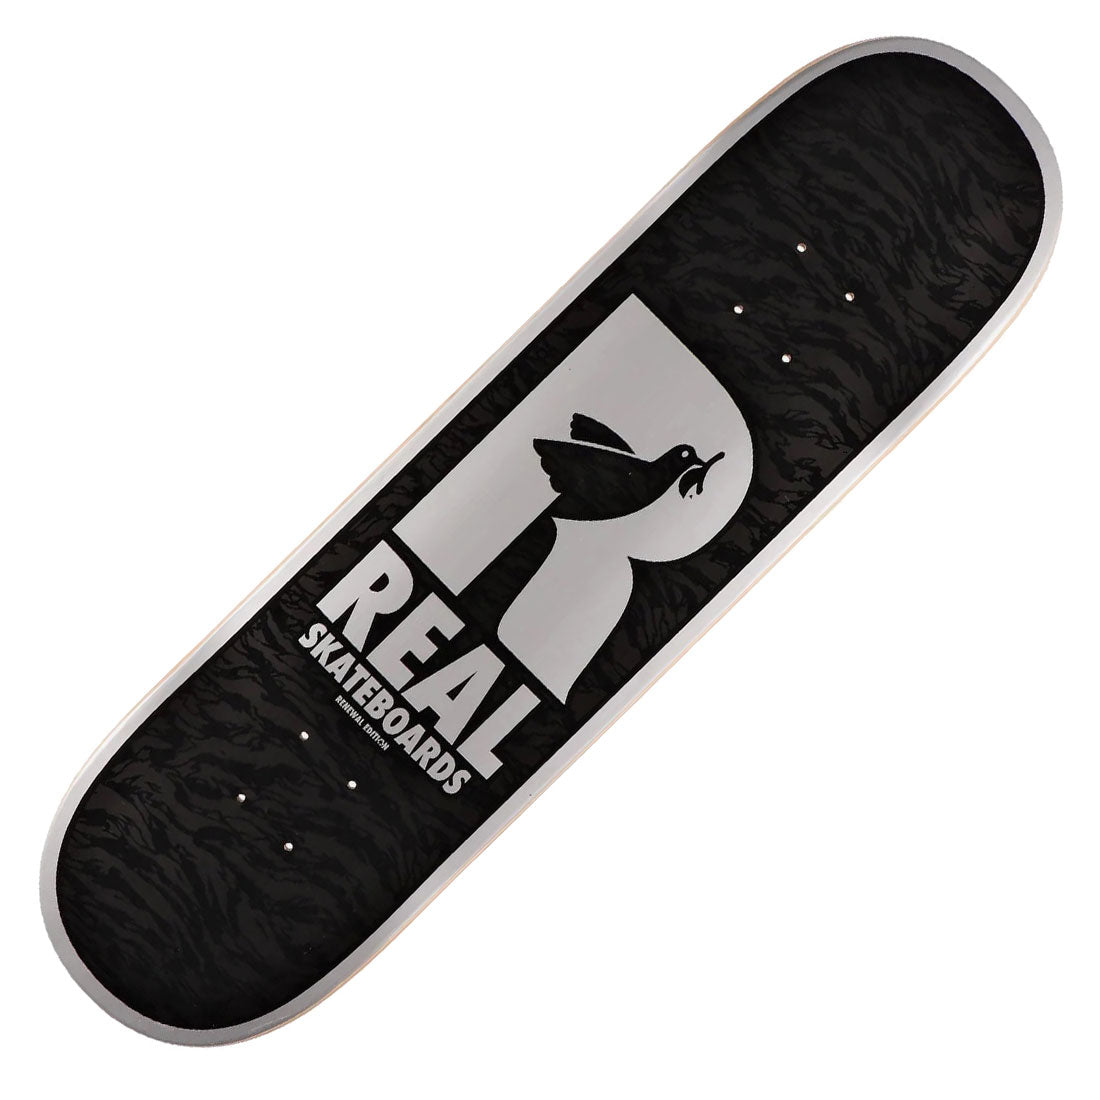 Real Doves Redux 8.25 Deck - Black/Silver Skateboard Decks Modern Street